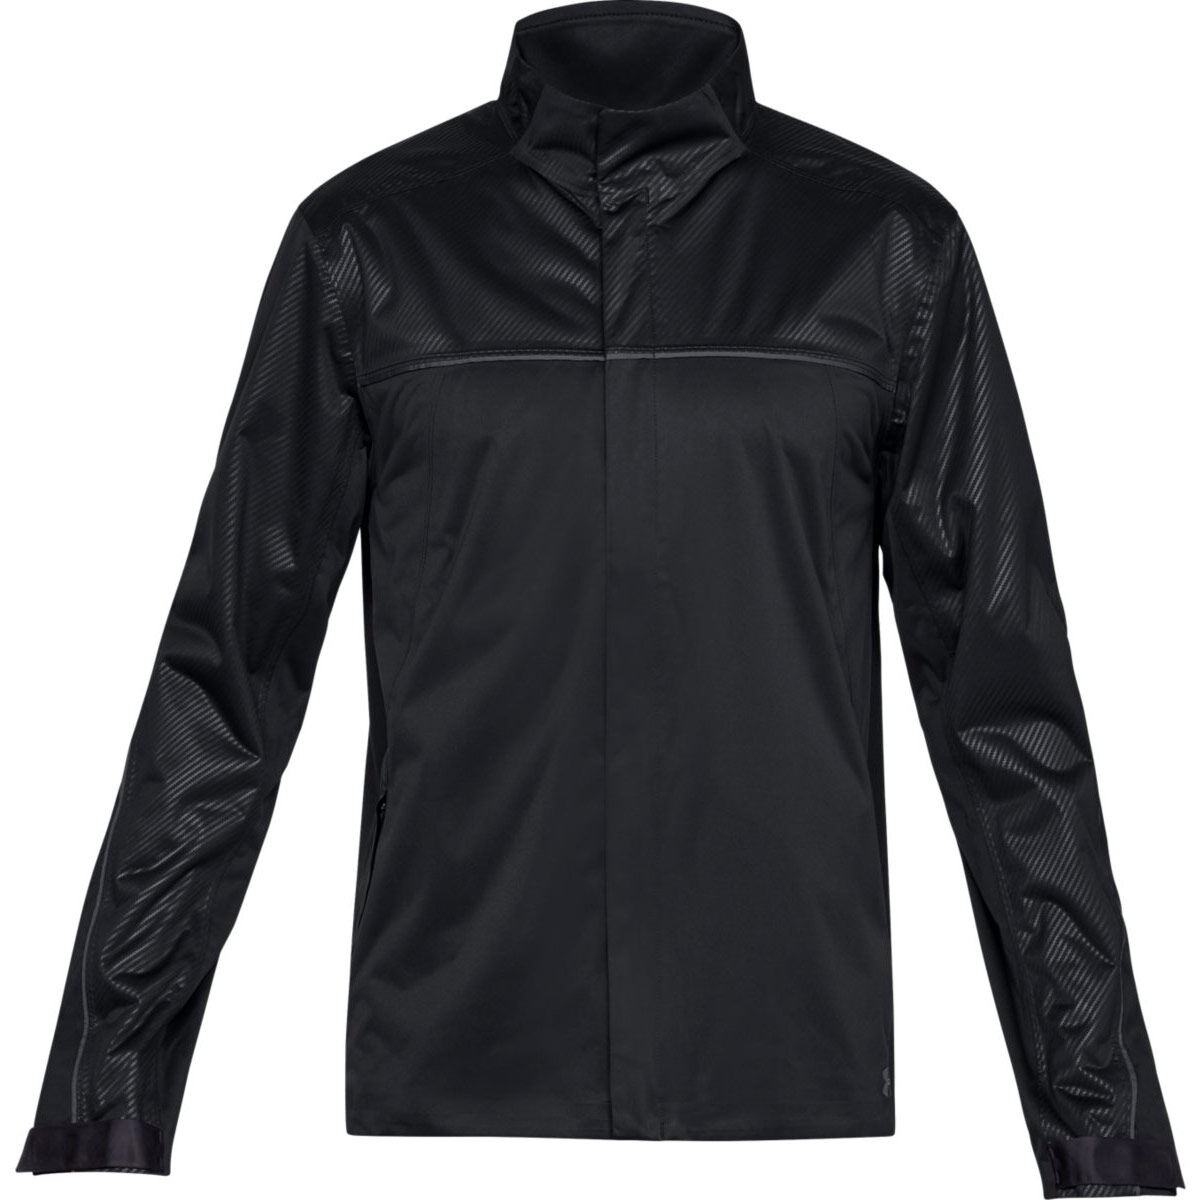 zara trf outerwear leather jacket